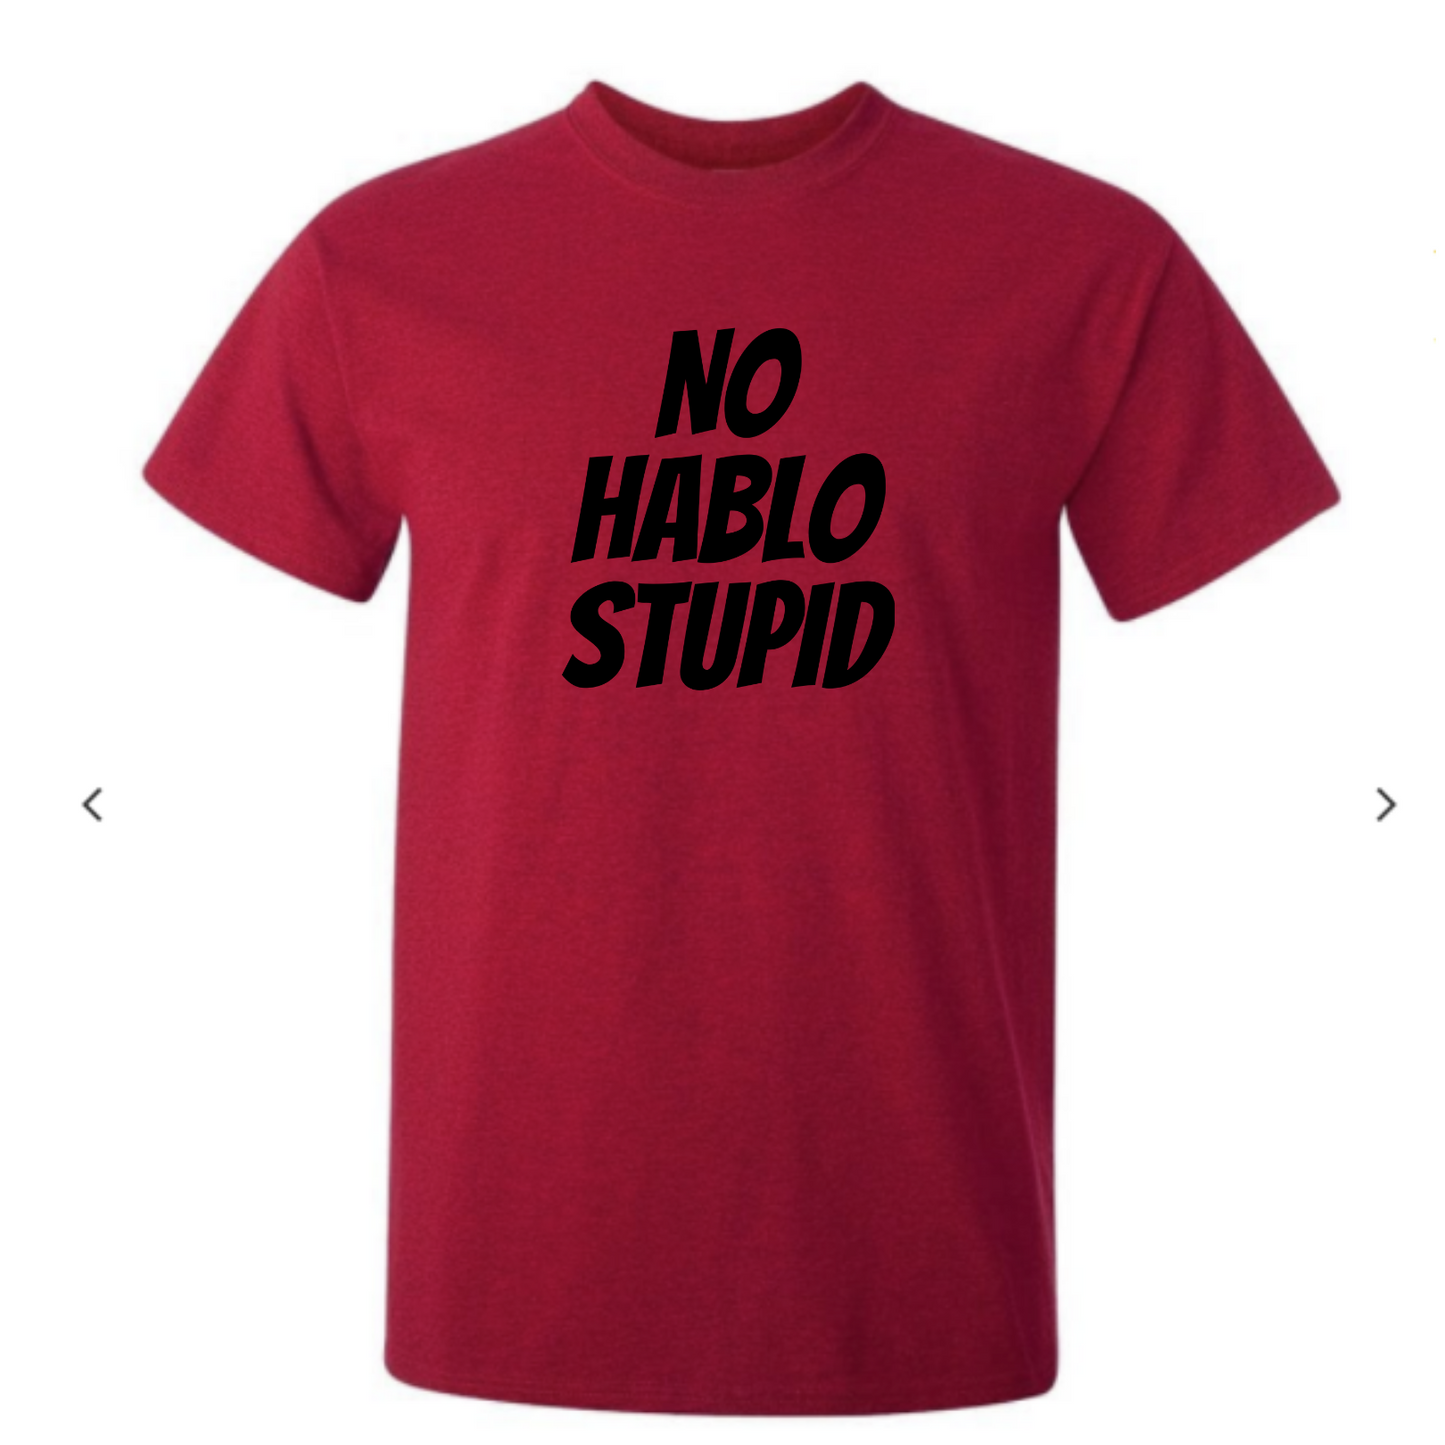 No Hablo Stupid - Graphic T-Shirt - Mister Snarky's